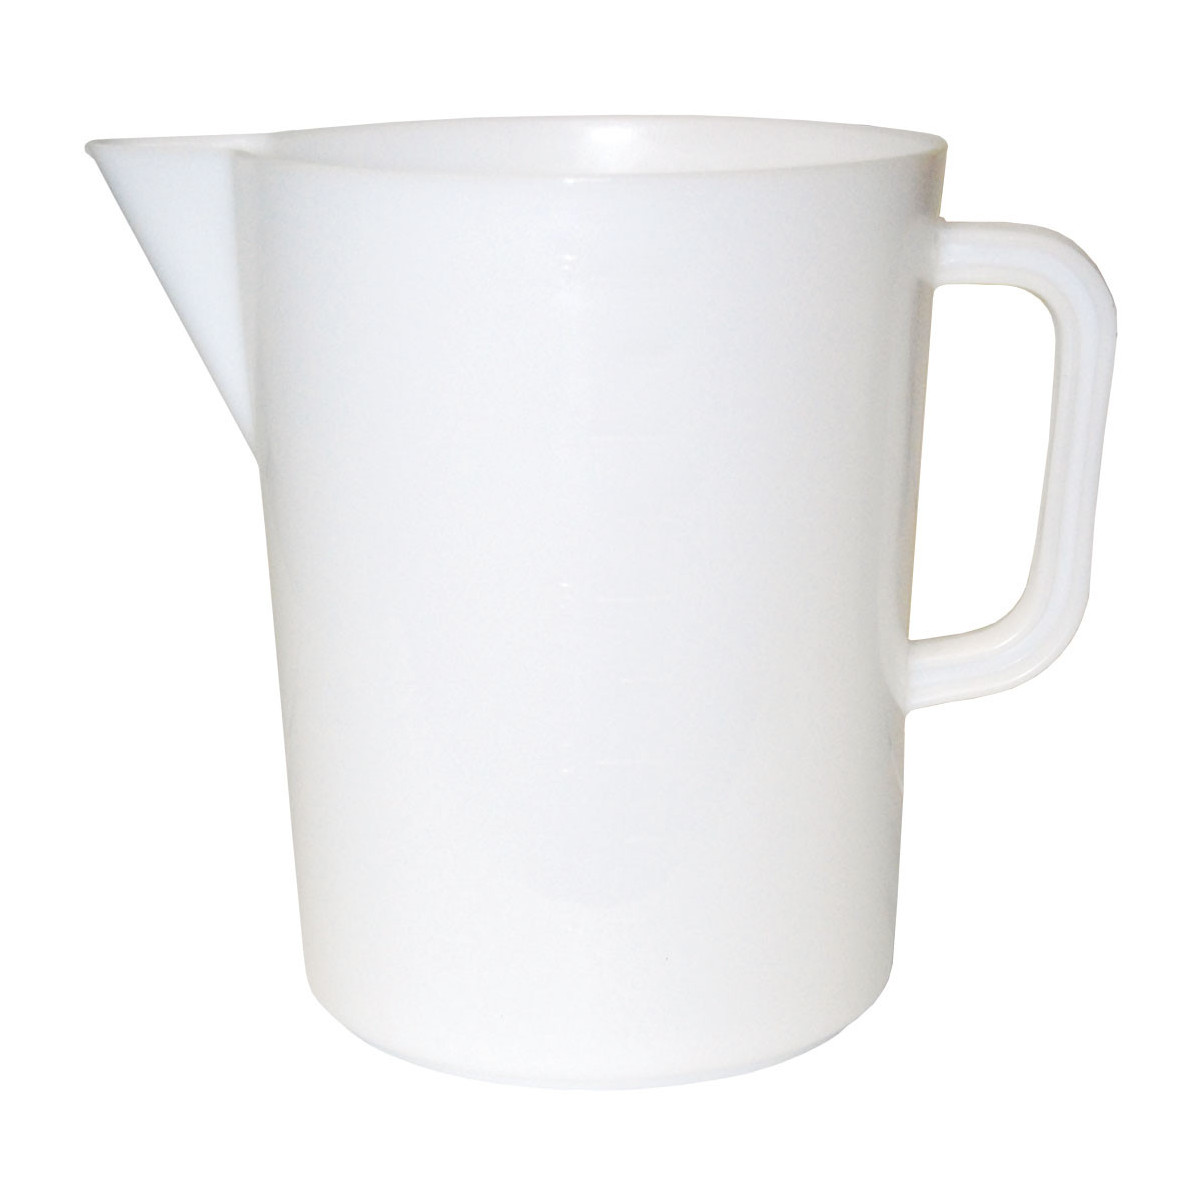 measuring jug graduated, white plast.5 l